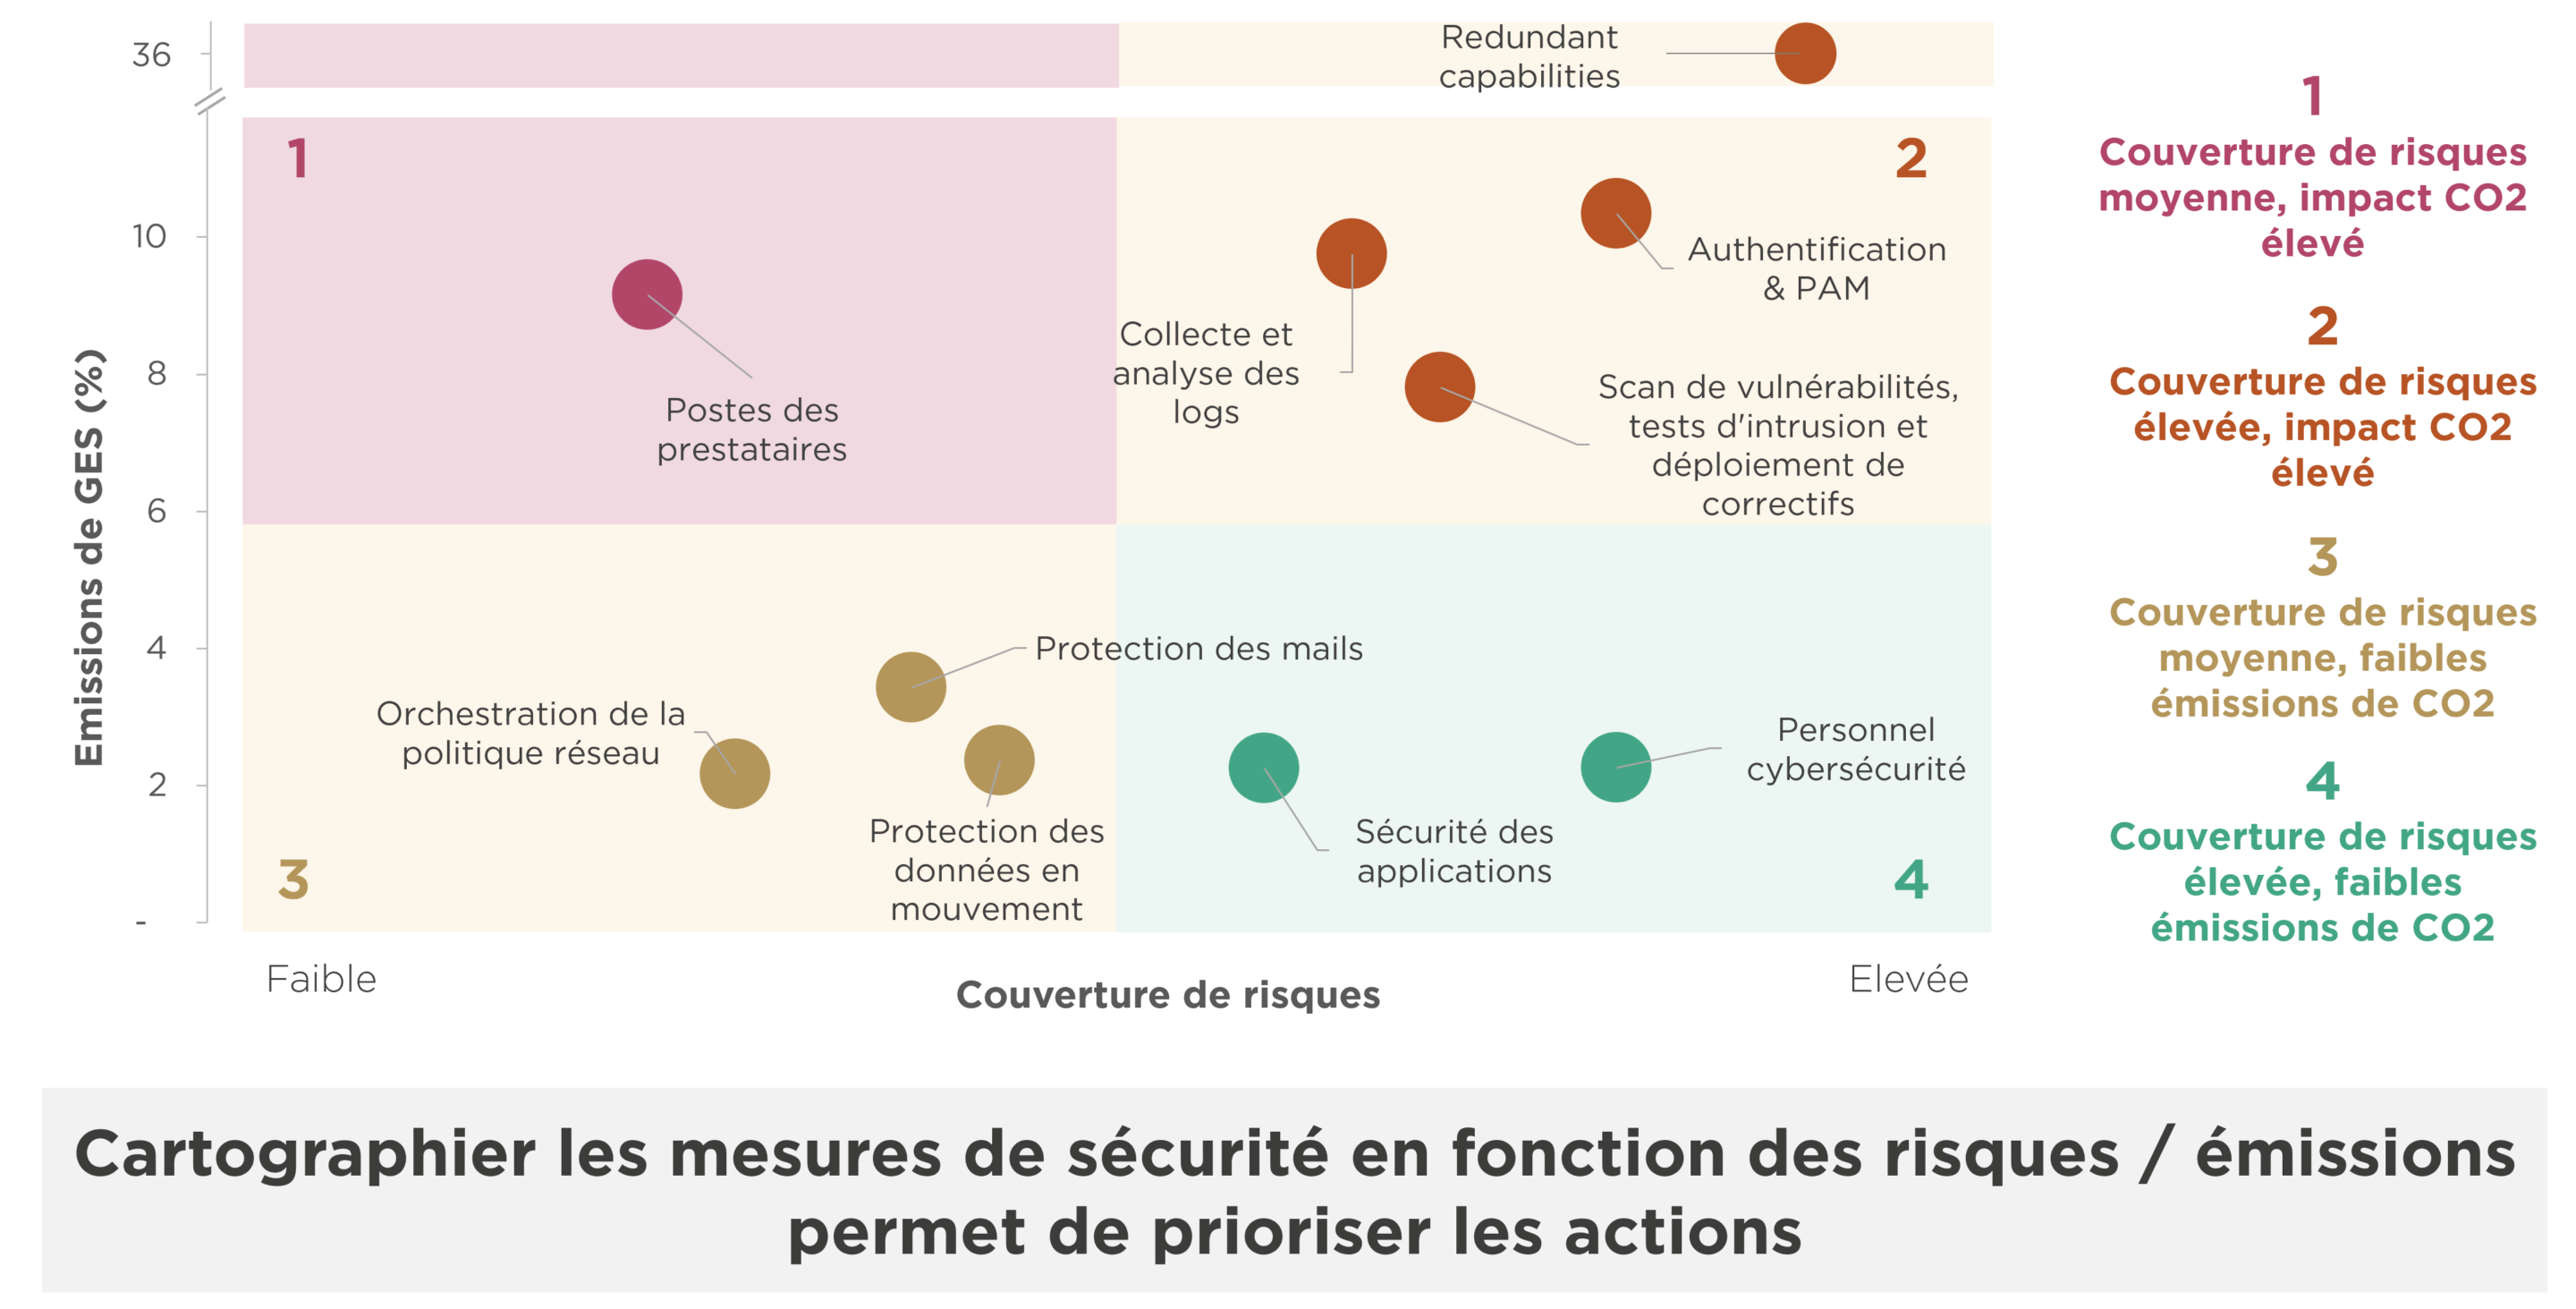 Cartographier les mesures de sÃ©curitÃ© en fonction des risques / Ã©missions permet de prioriser les actions